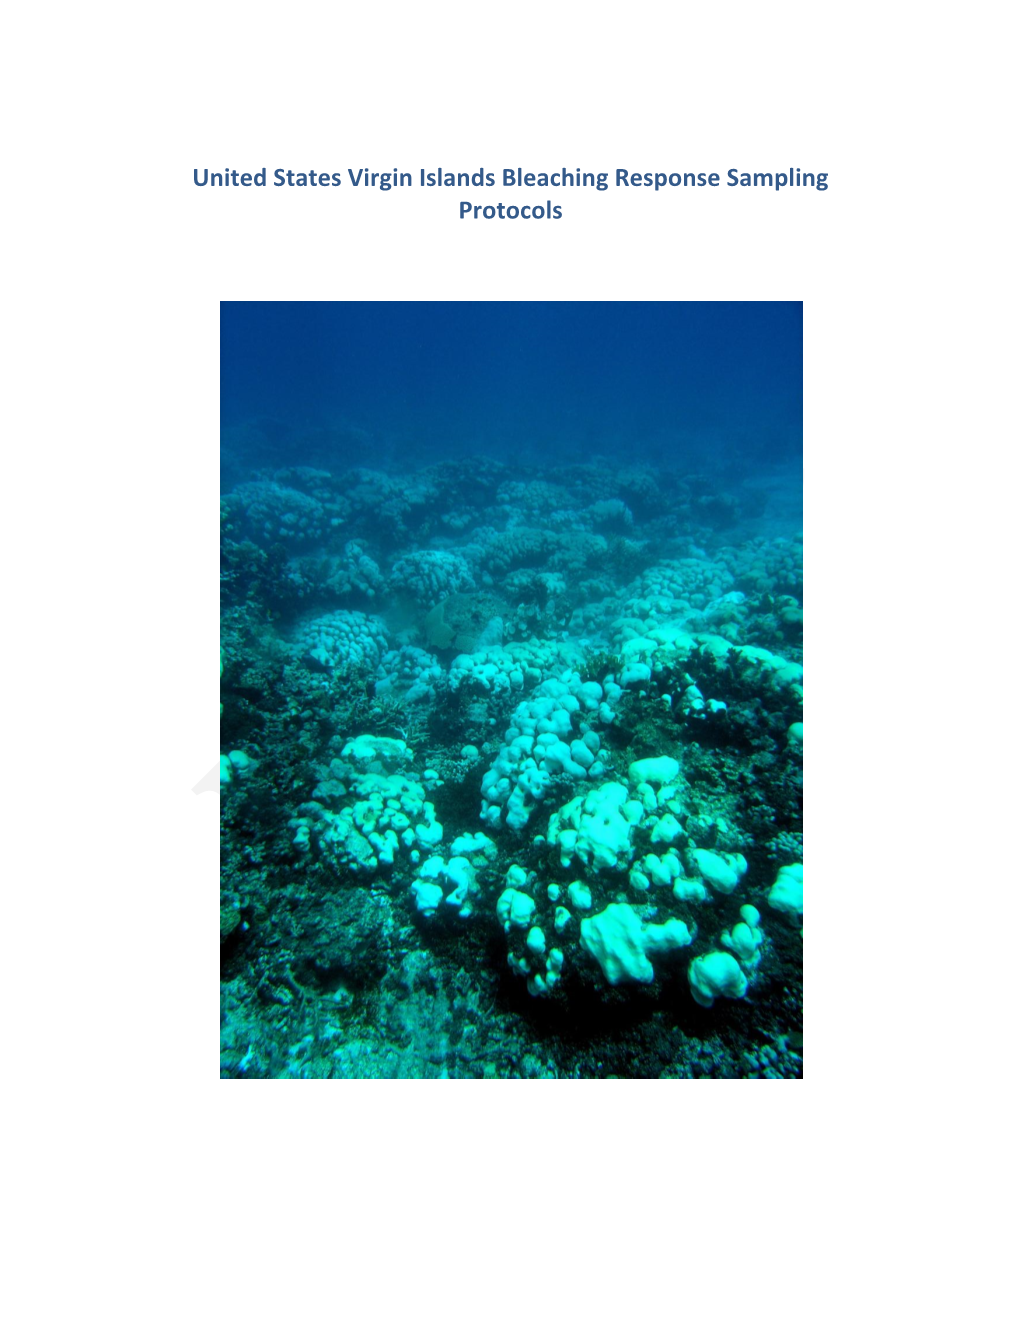 United States Virgin Islands Bleaching Response Sampling Protocols